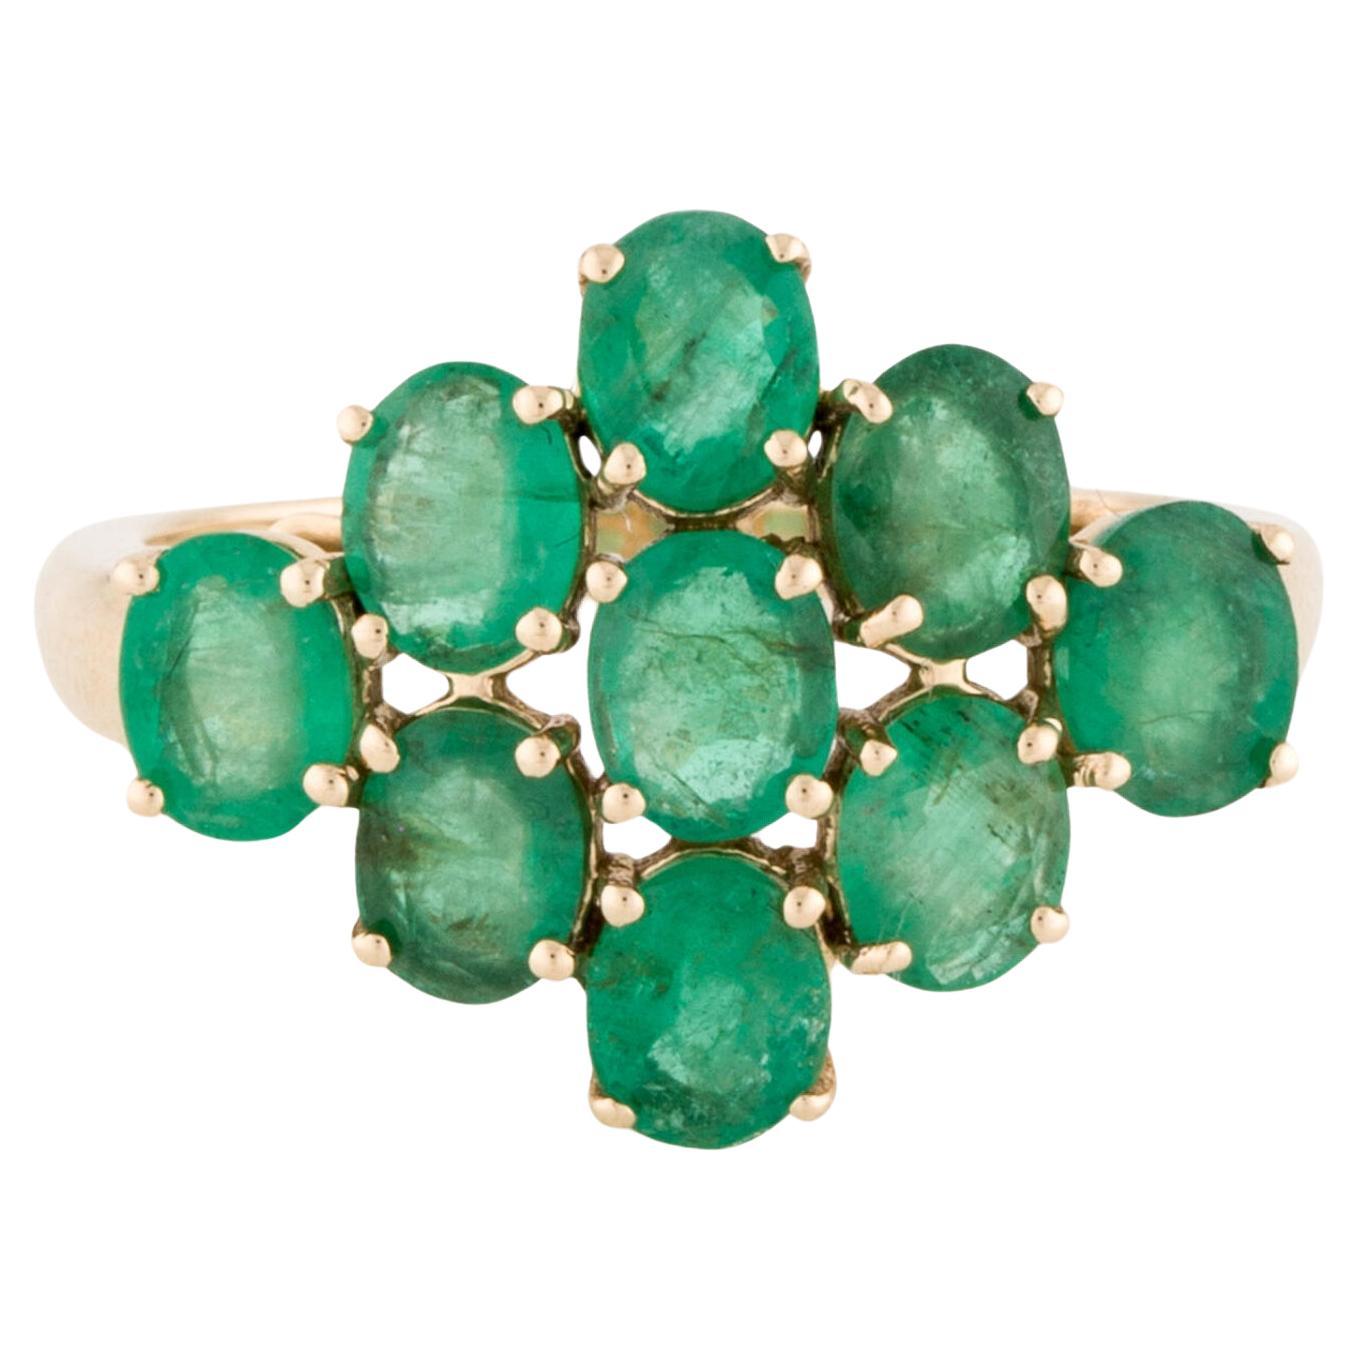 14K Emerald Cocktail Ring Size 6.75 - Elegant Statement Jewelry, Luxury Design